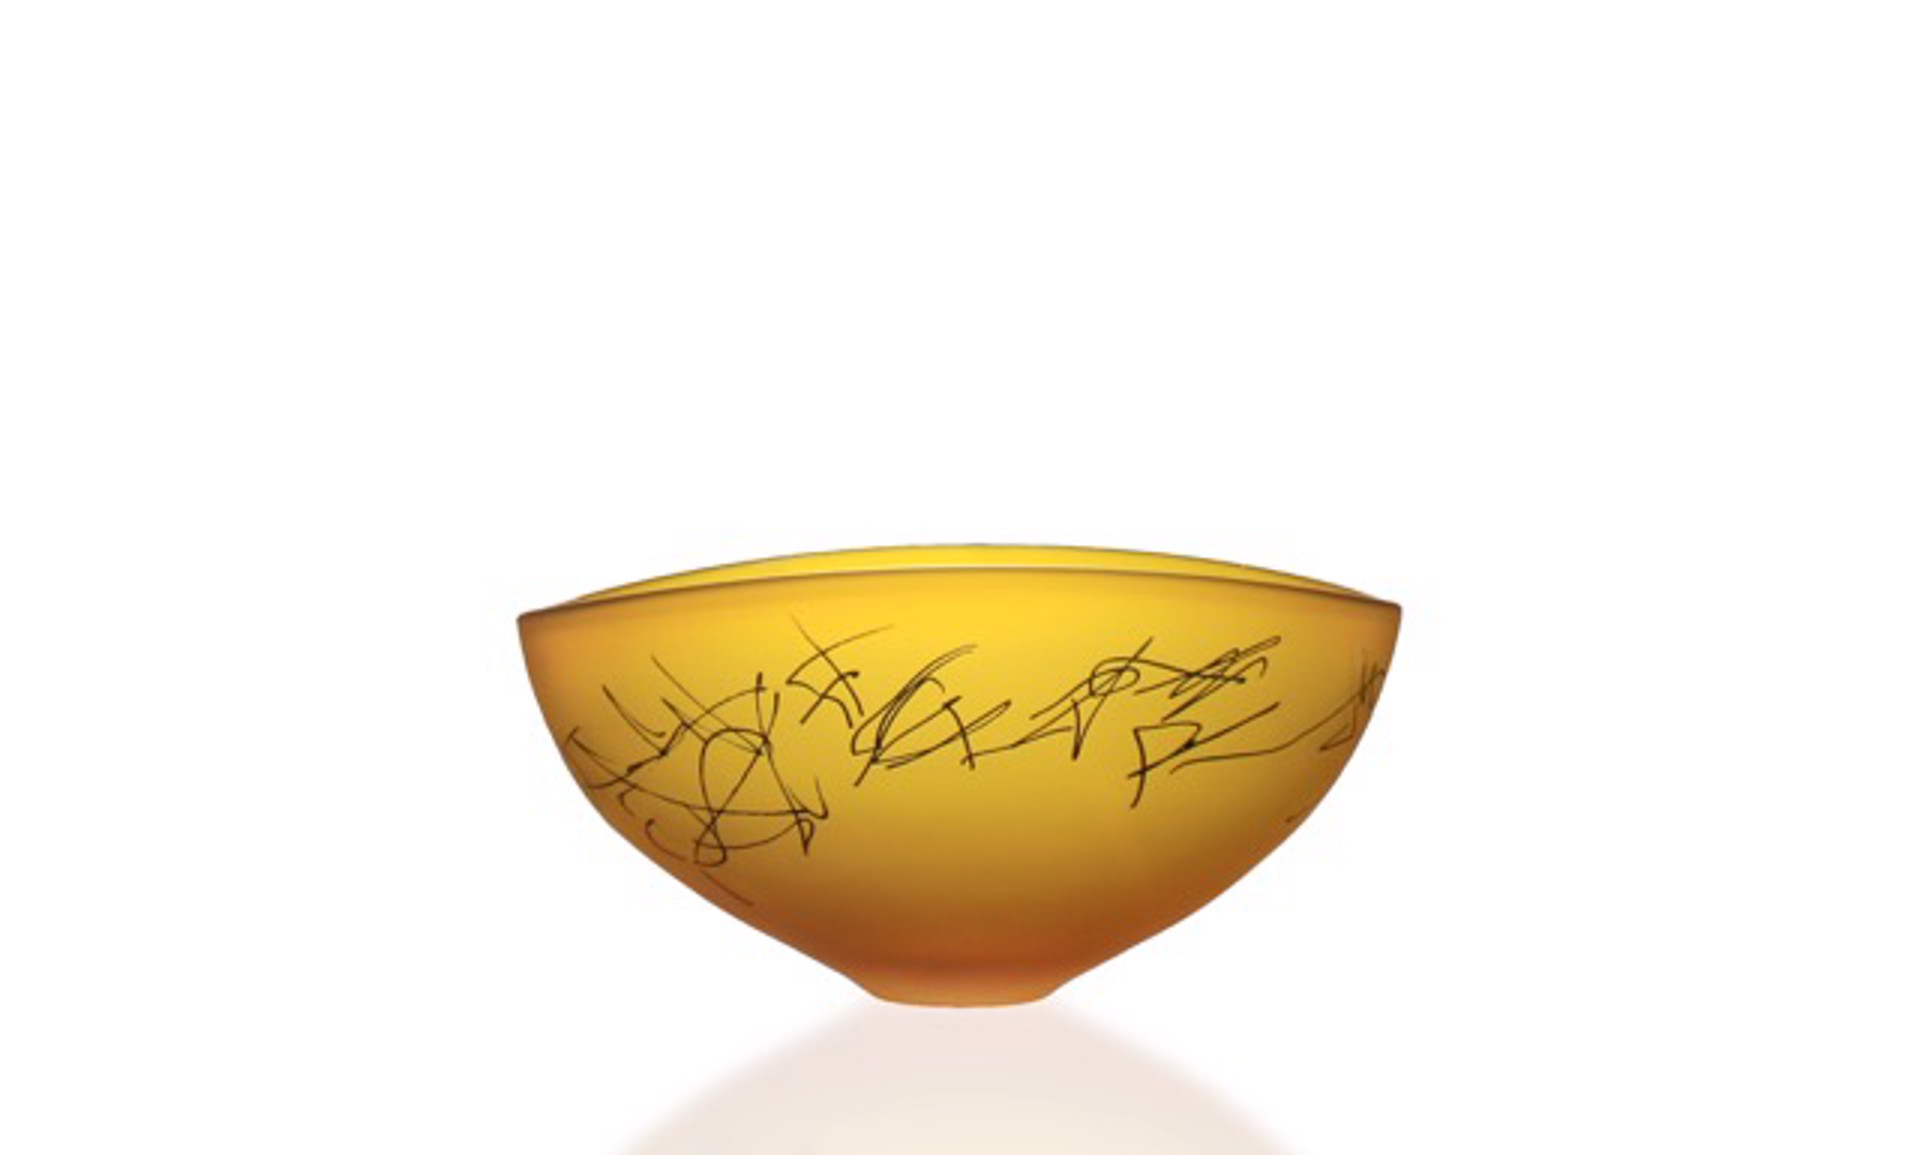 Brilliant Gold Scribe Bowl by The Goodman Studio